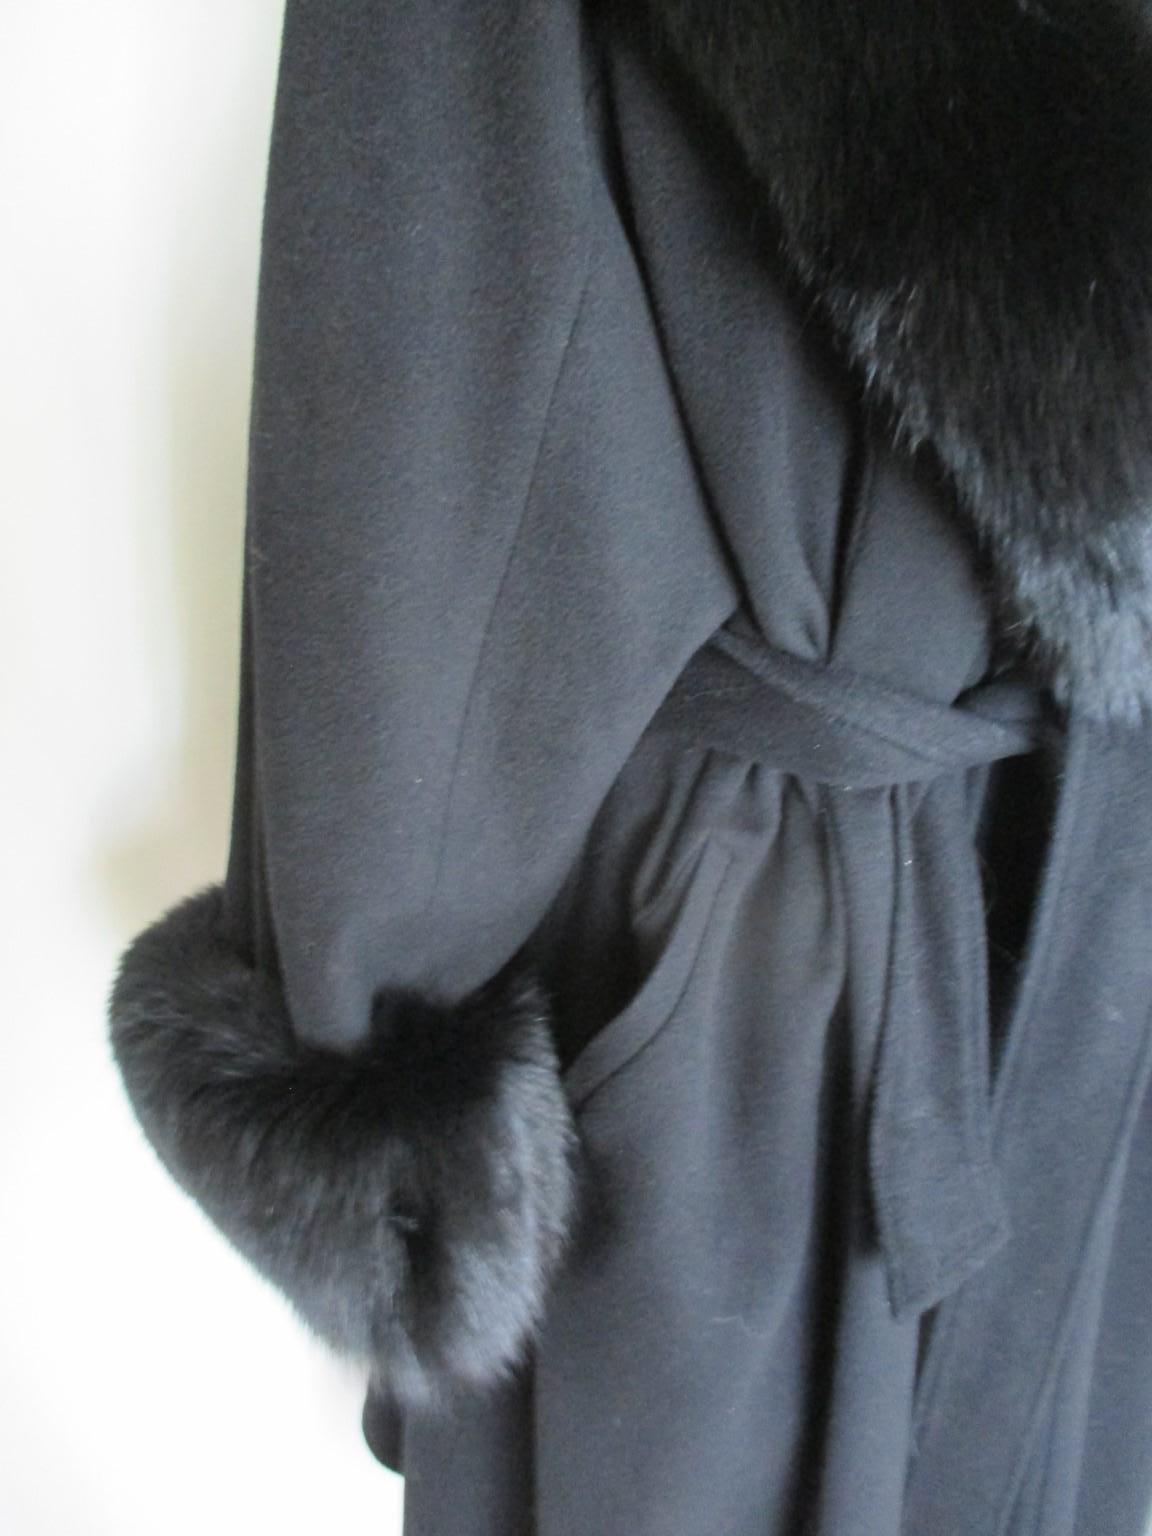 black flared coat